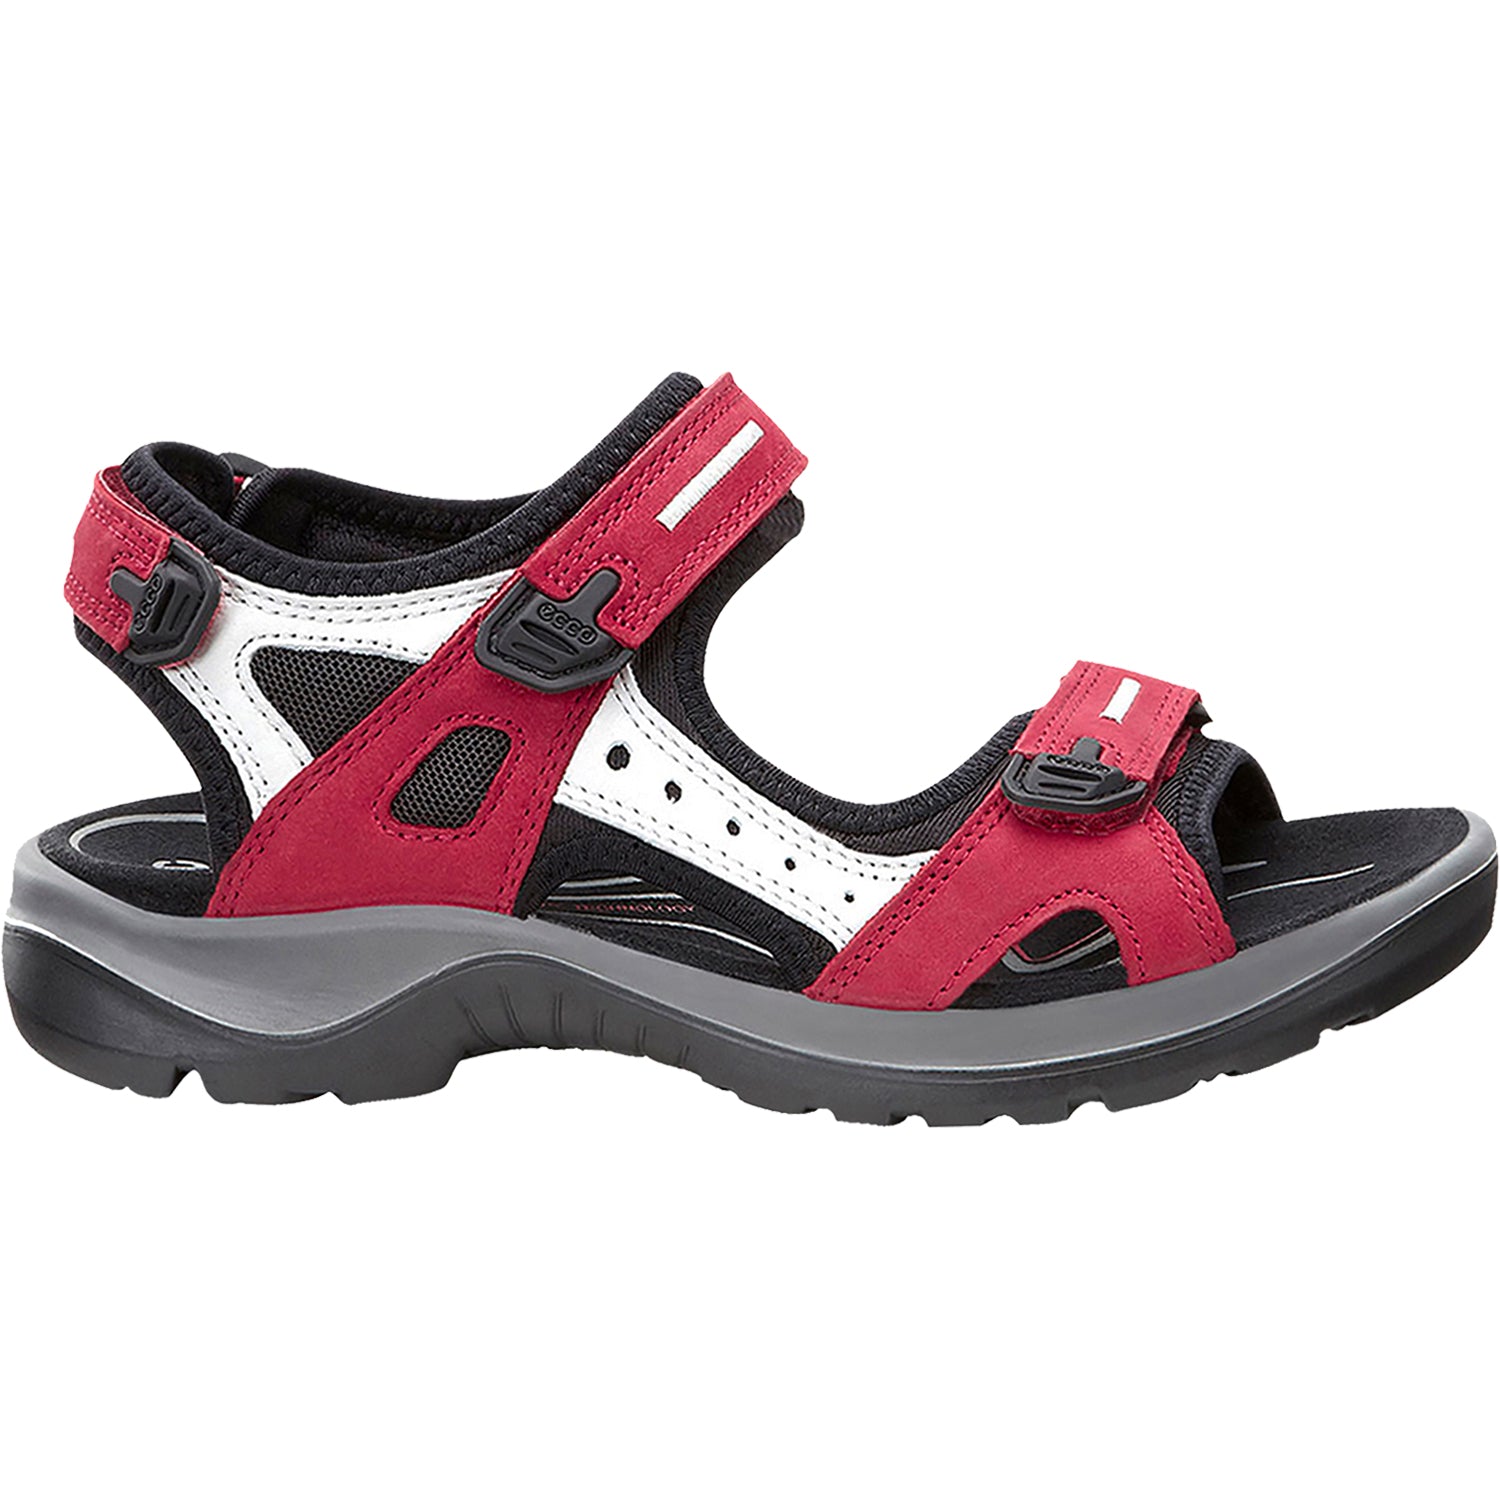 Ecco Yucatan Chili Red | Women's Outdoor Sandals | Footwear etc.